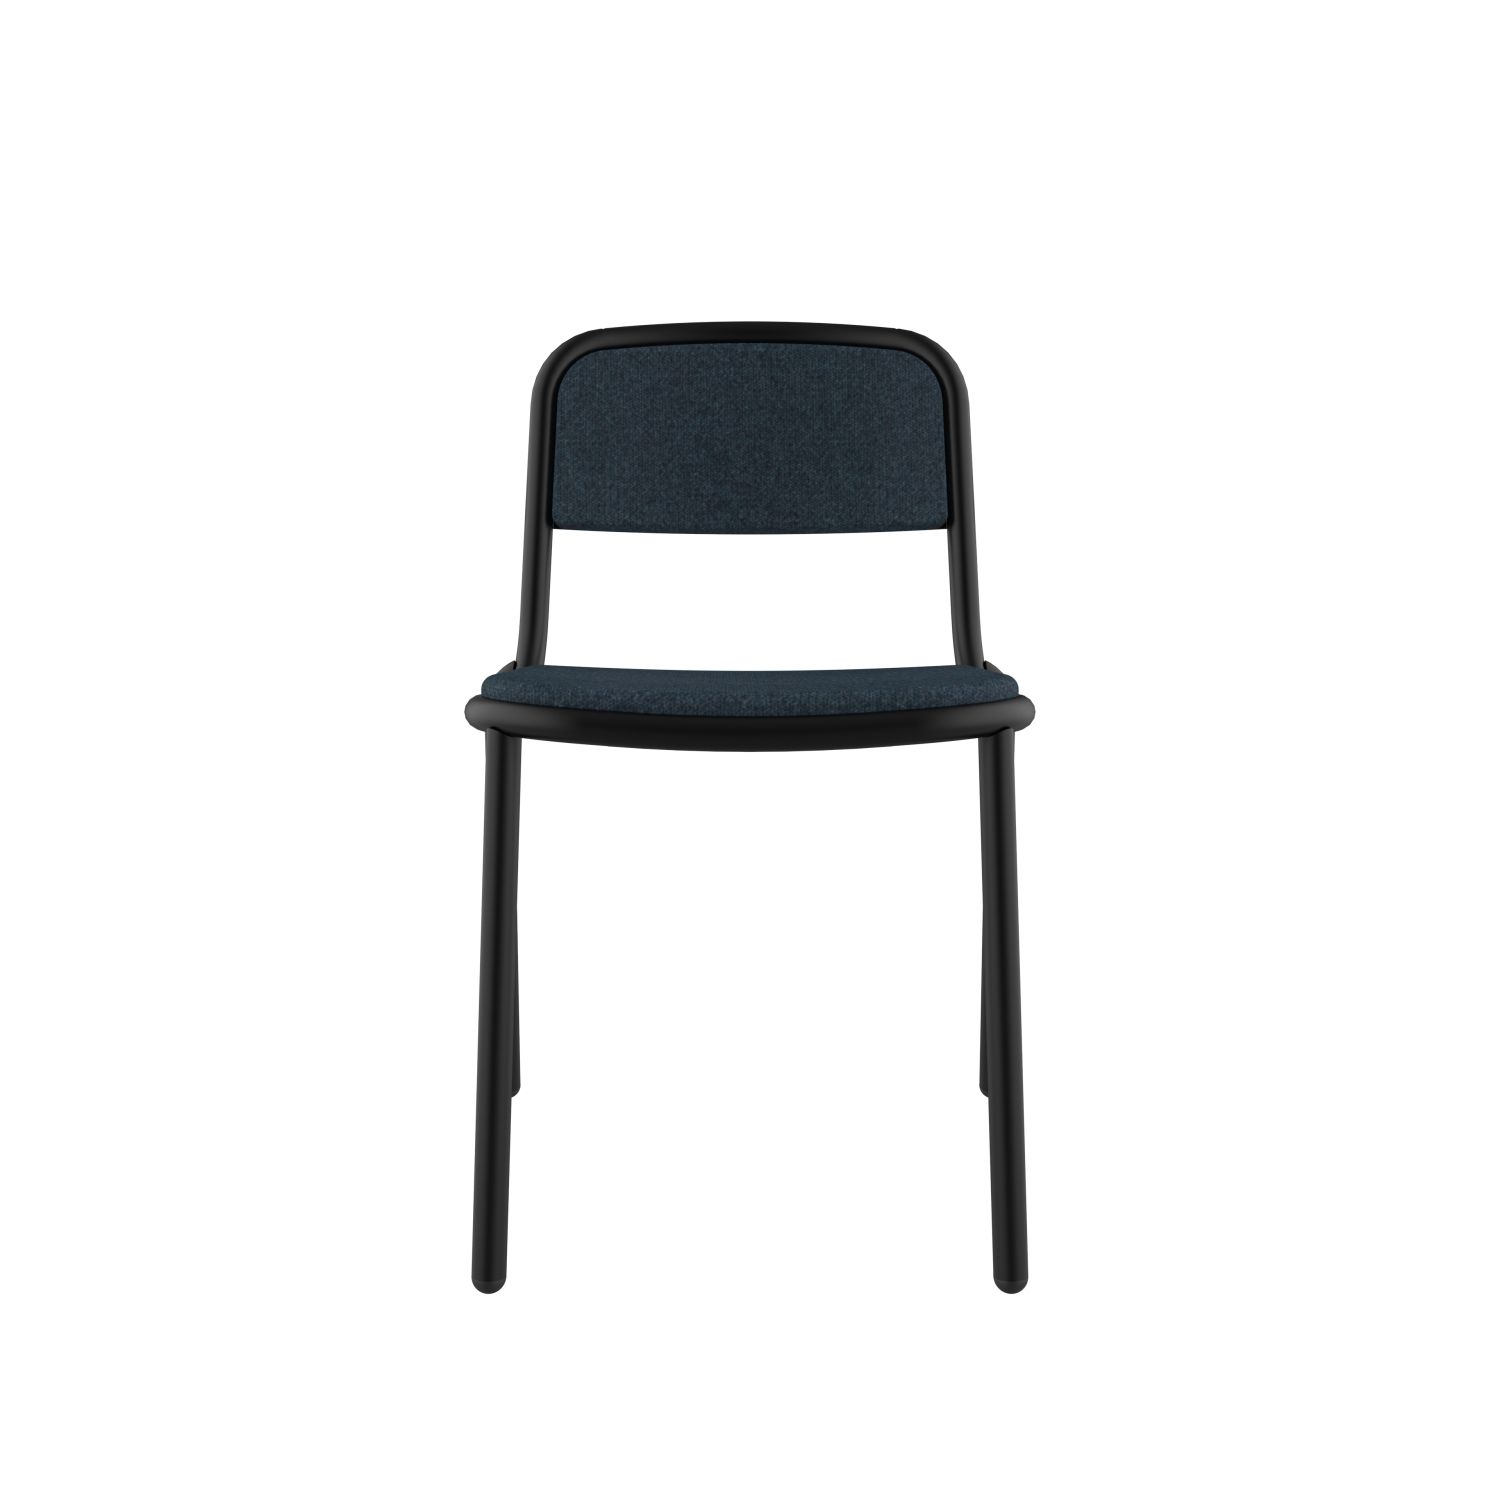 lensvelt stefan scholten loop chair upholsterd stackable without armrest moss night blue 45 price level 1 black ral9005 hard leg ends